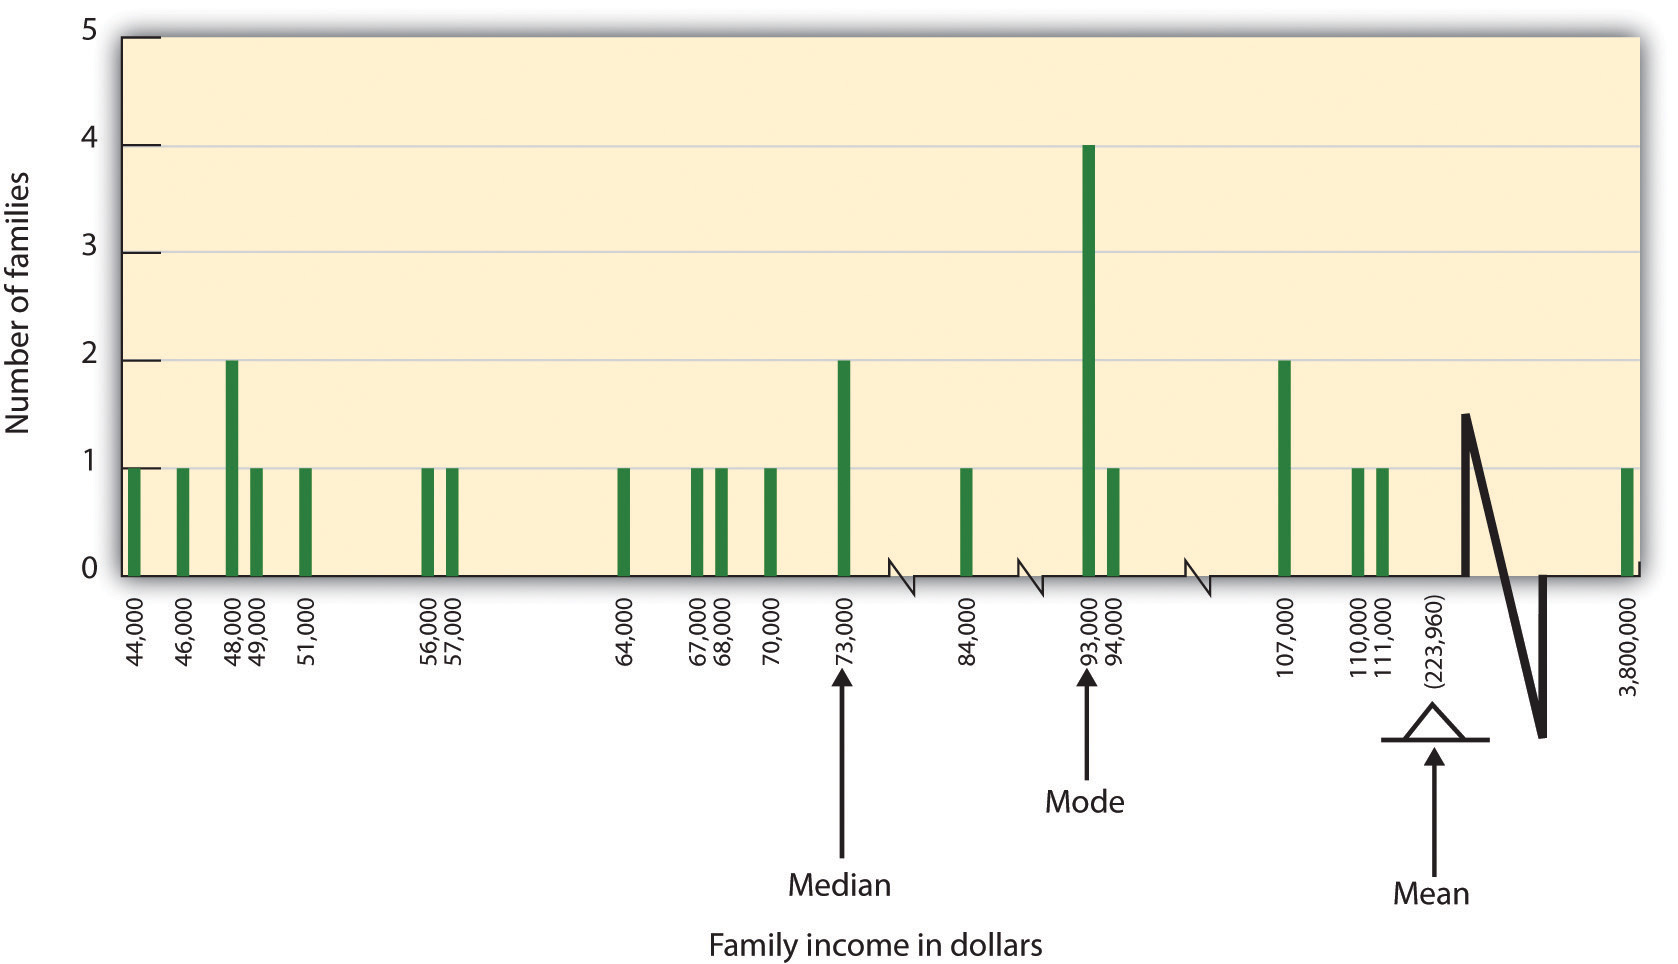 Family income median versus mean. Long description available.